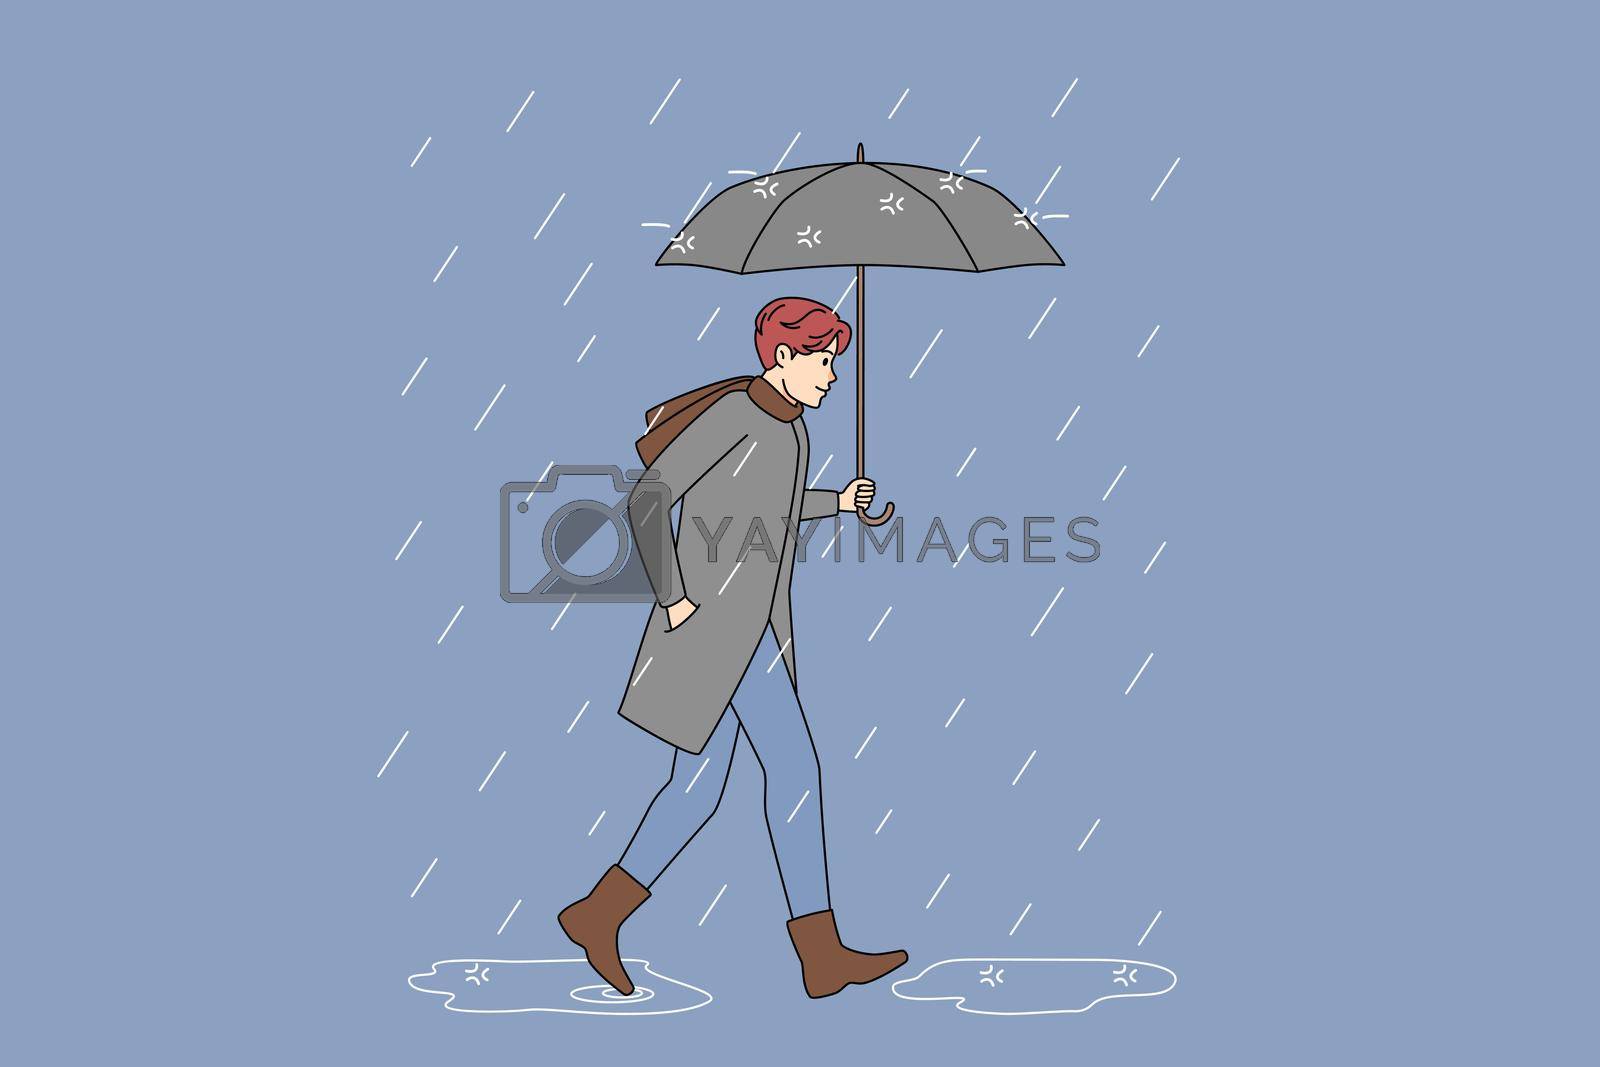 Royalty free image of Man with umbrella walking in rain by Vasilyeu